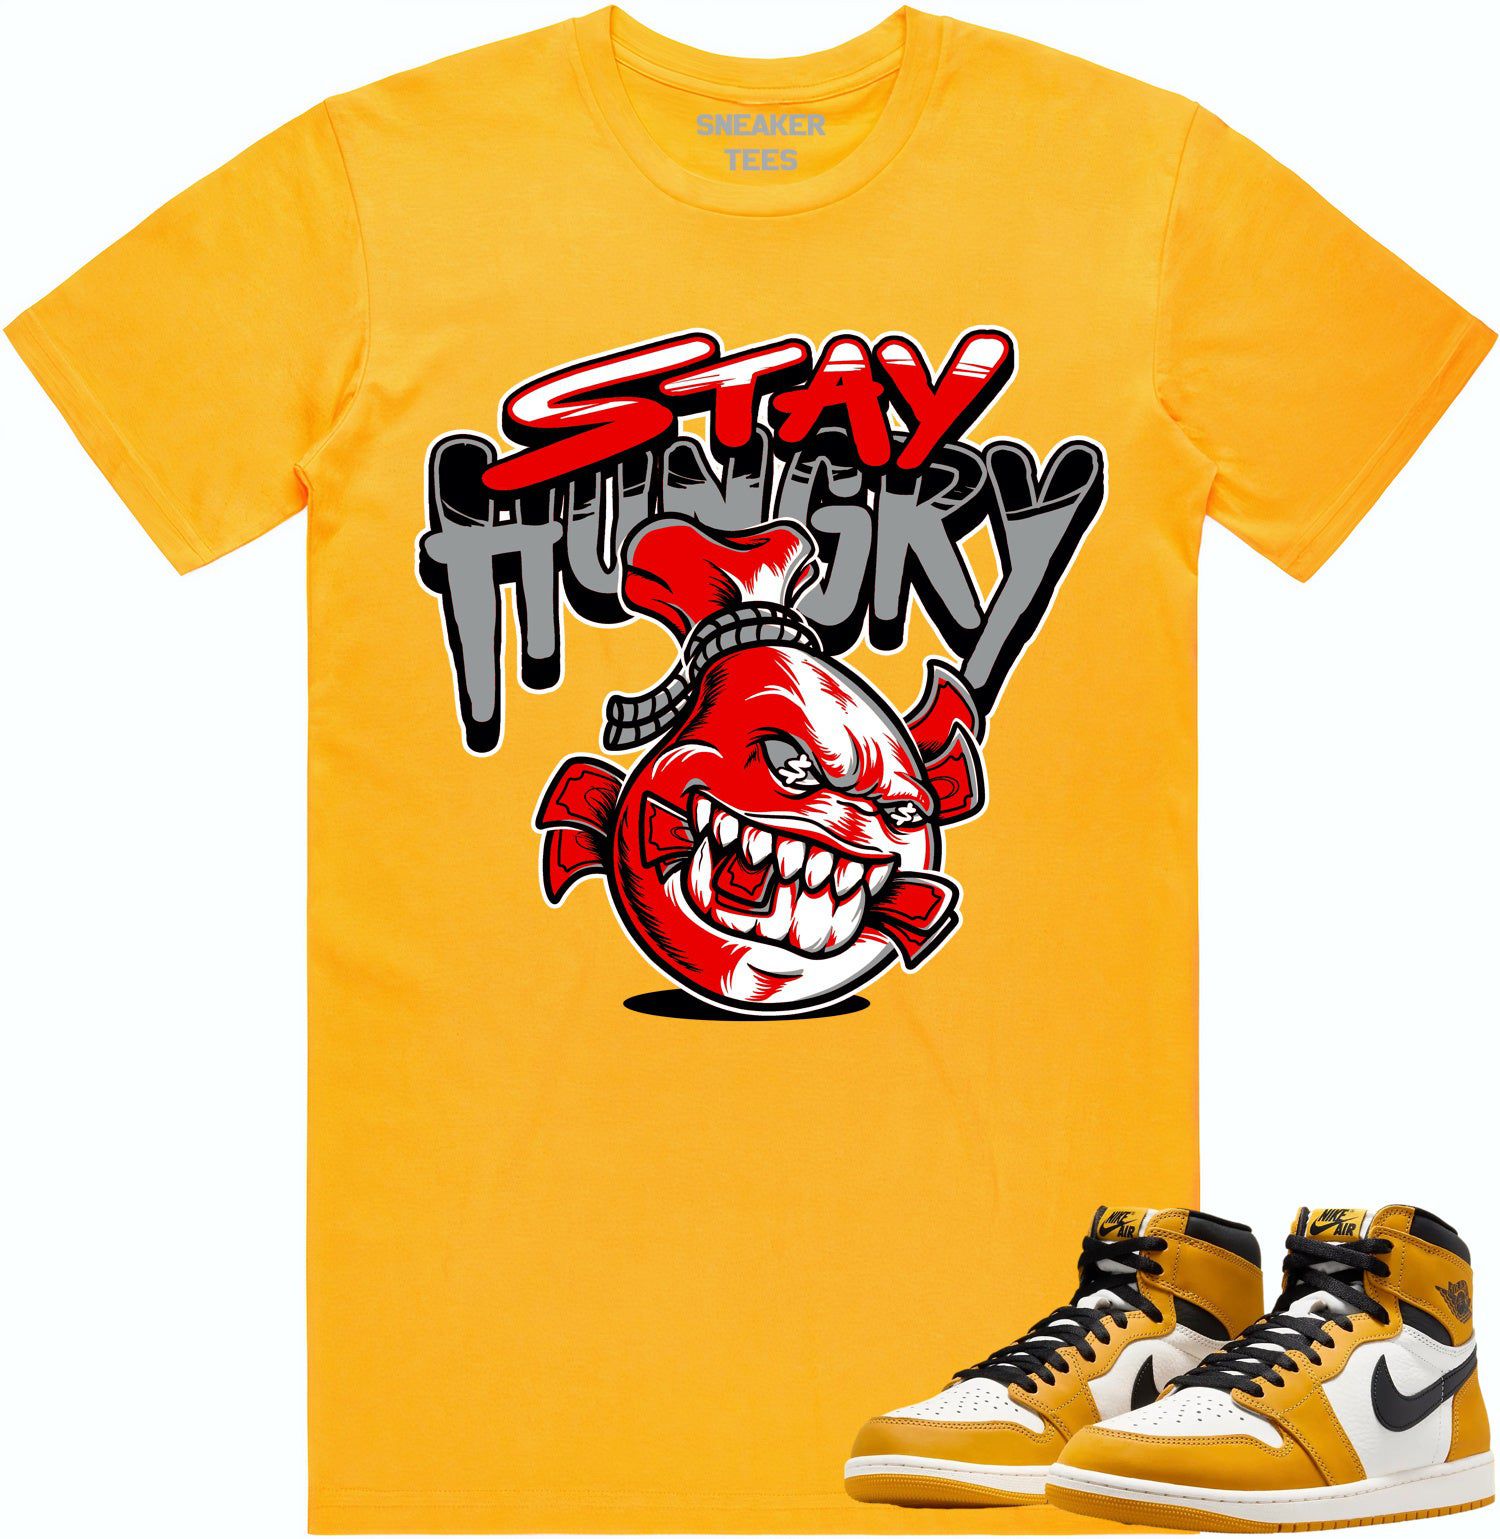 Yellow Ochre 1s Shirt - Jordan Retro 1 Sneaker Tees - Stay Hungry